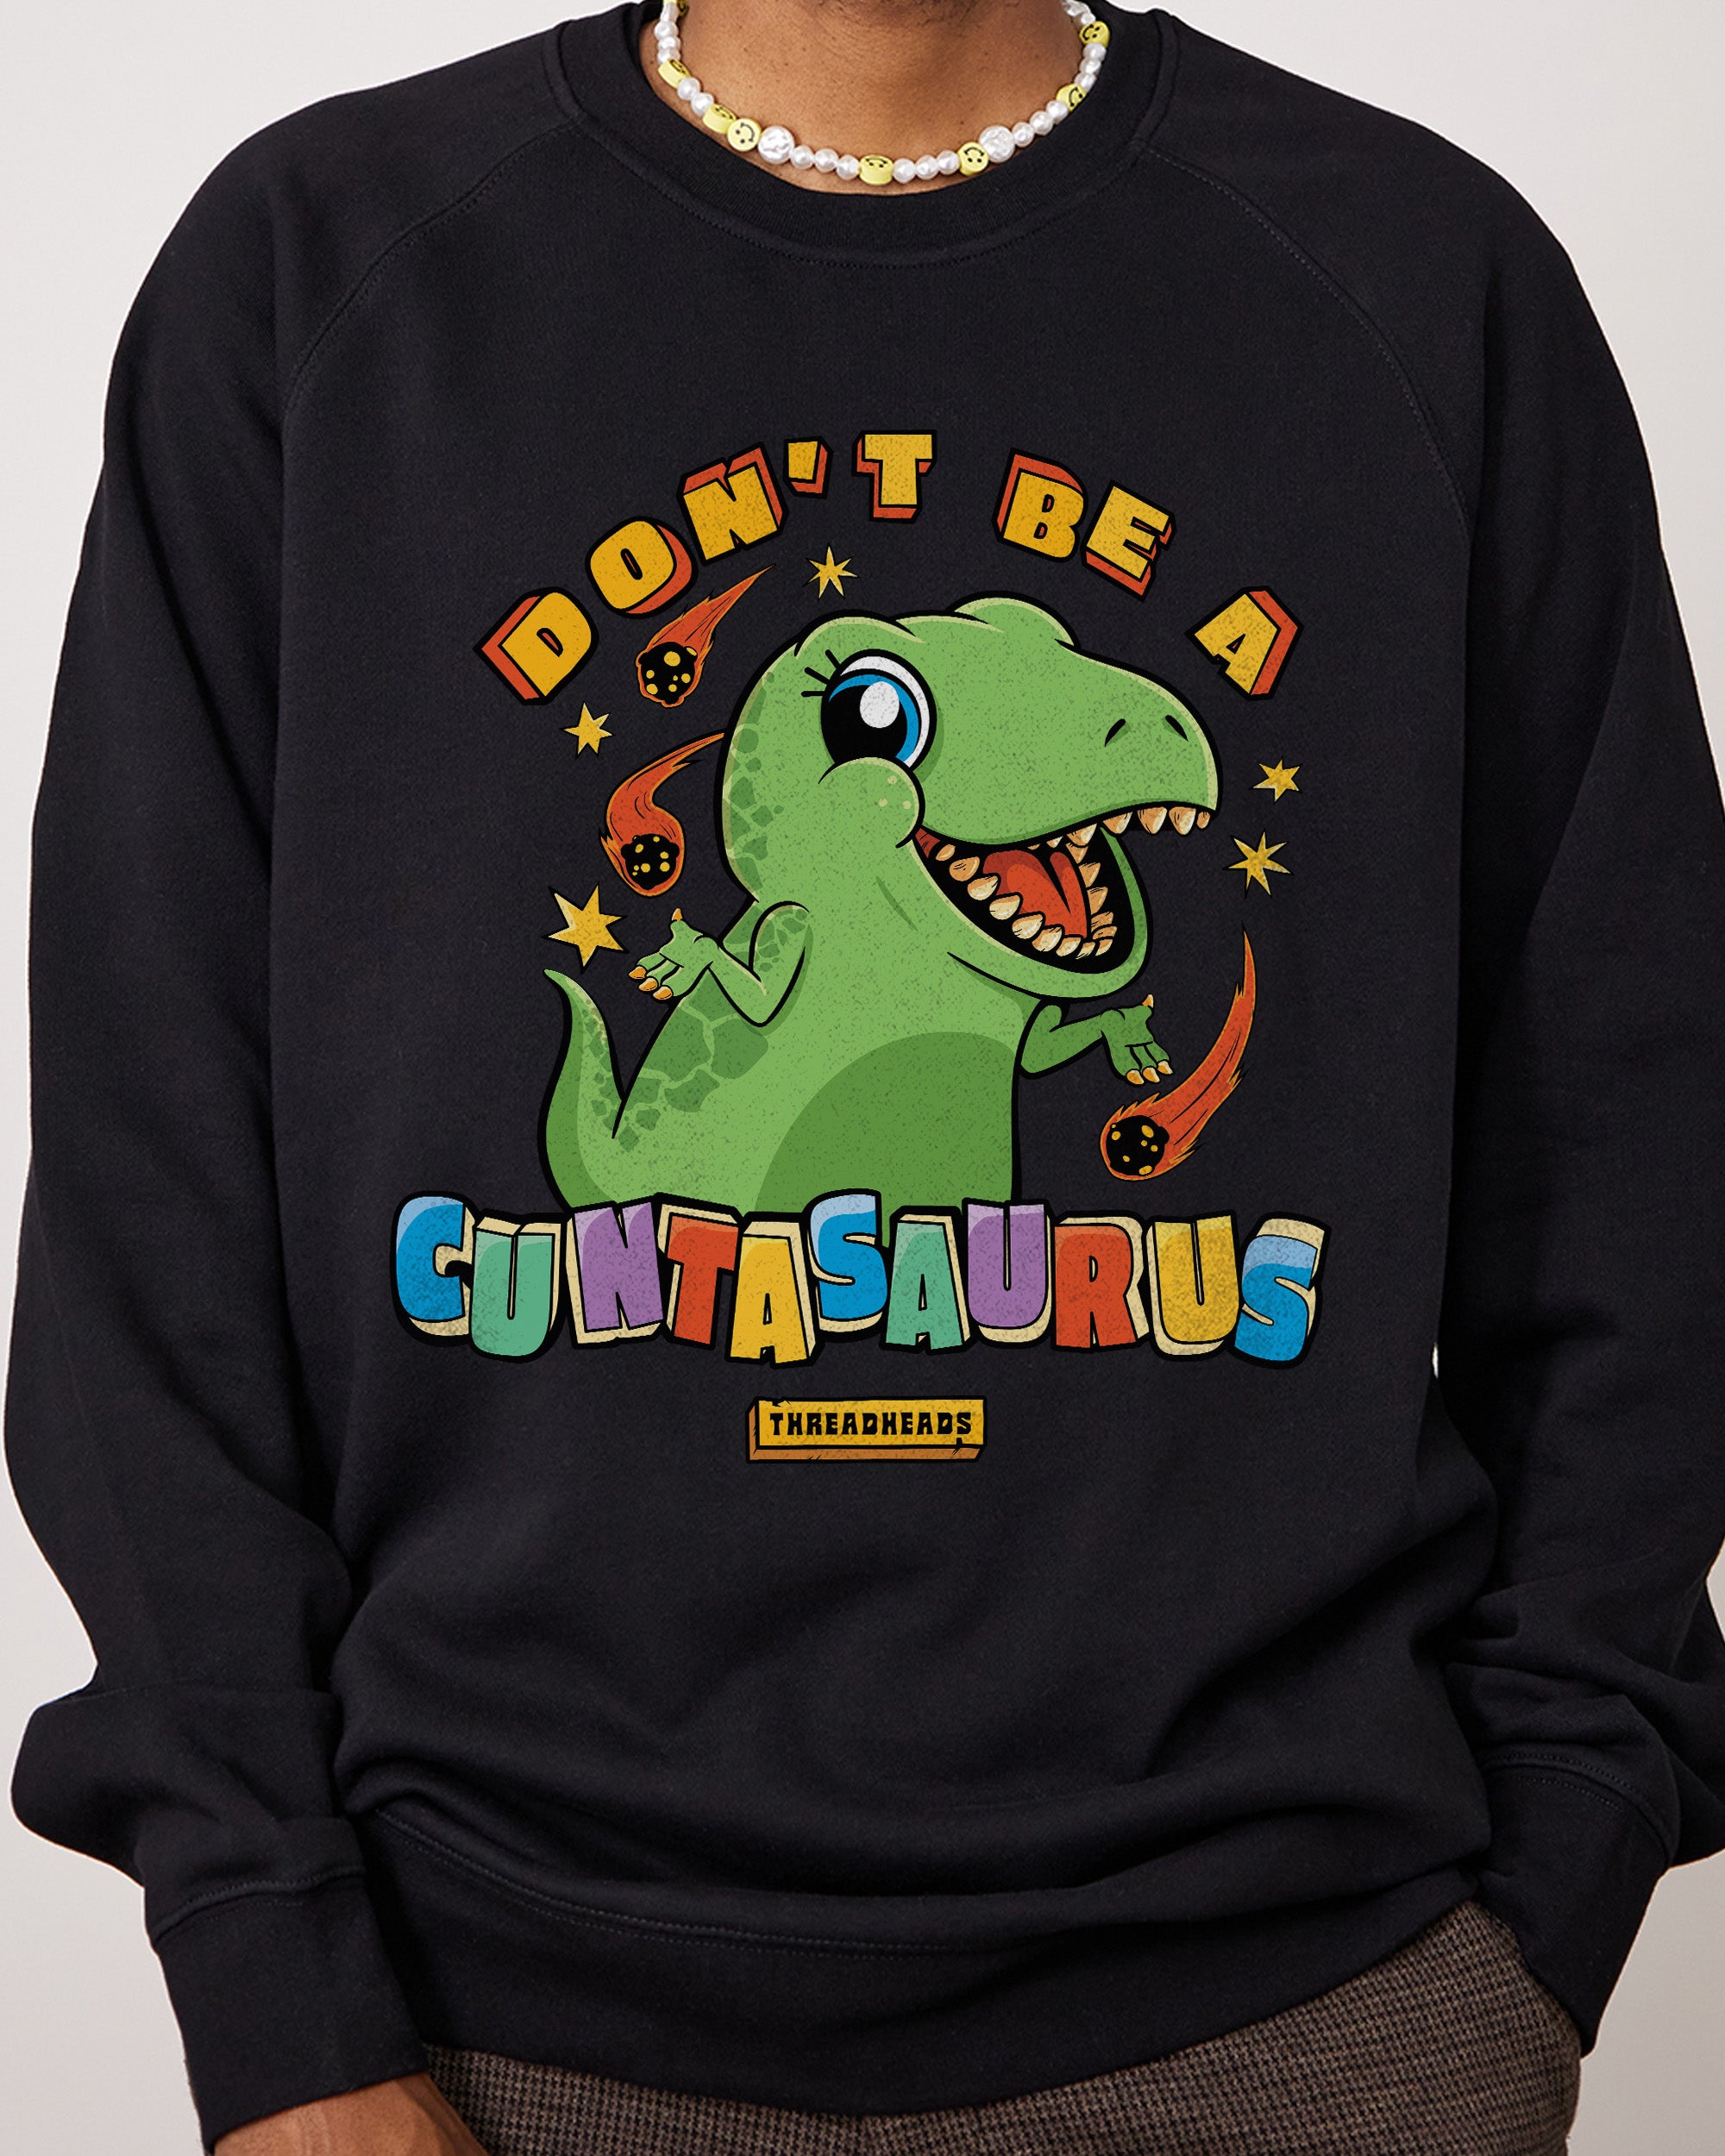 Don't Be a Cuntasaurus Jumper